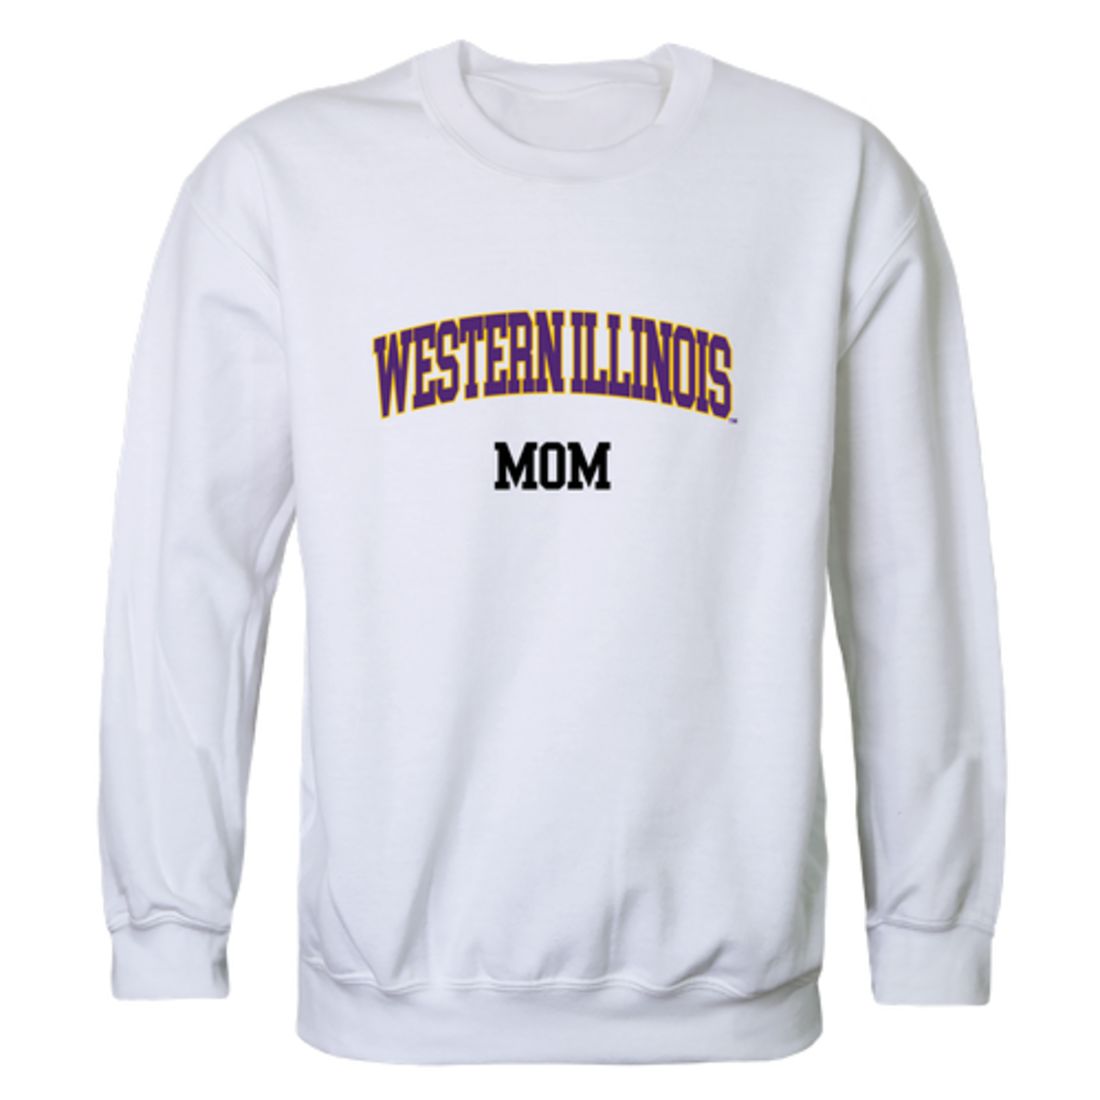 WIU Western Illinois University Leathernecks Mom Fleece Crewneck Pullover Sweatshirt Heather Charcoal Small-Campus-Wardrobe